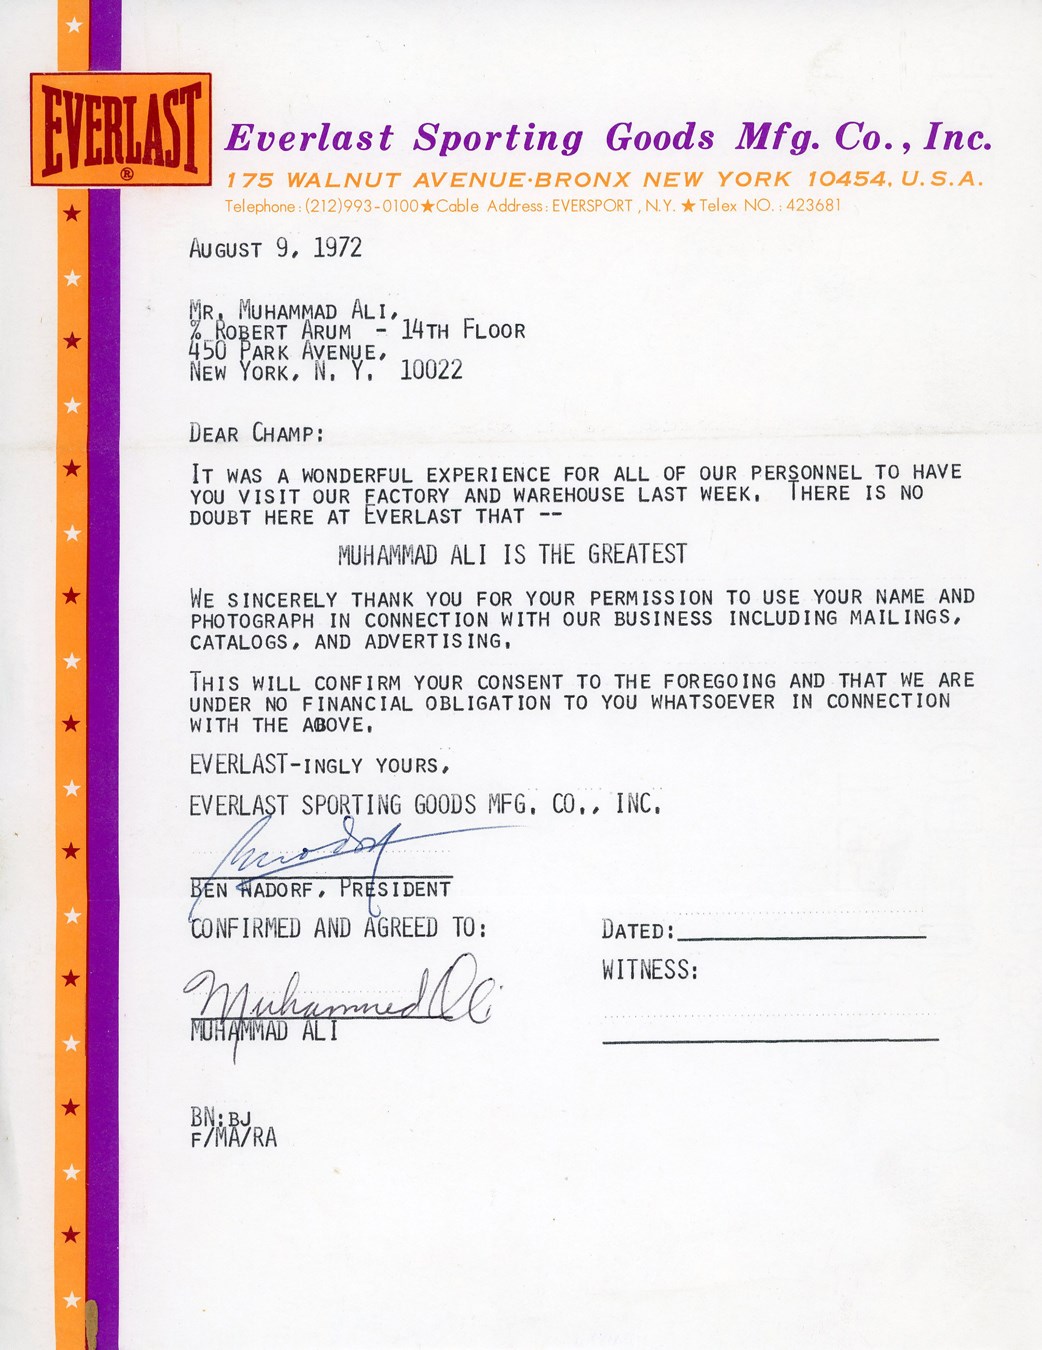 Muhammad Ali Signed Agreement With Everlast (1972) - PSA LOA